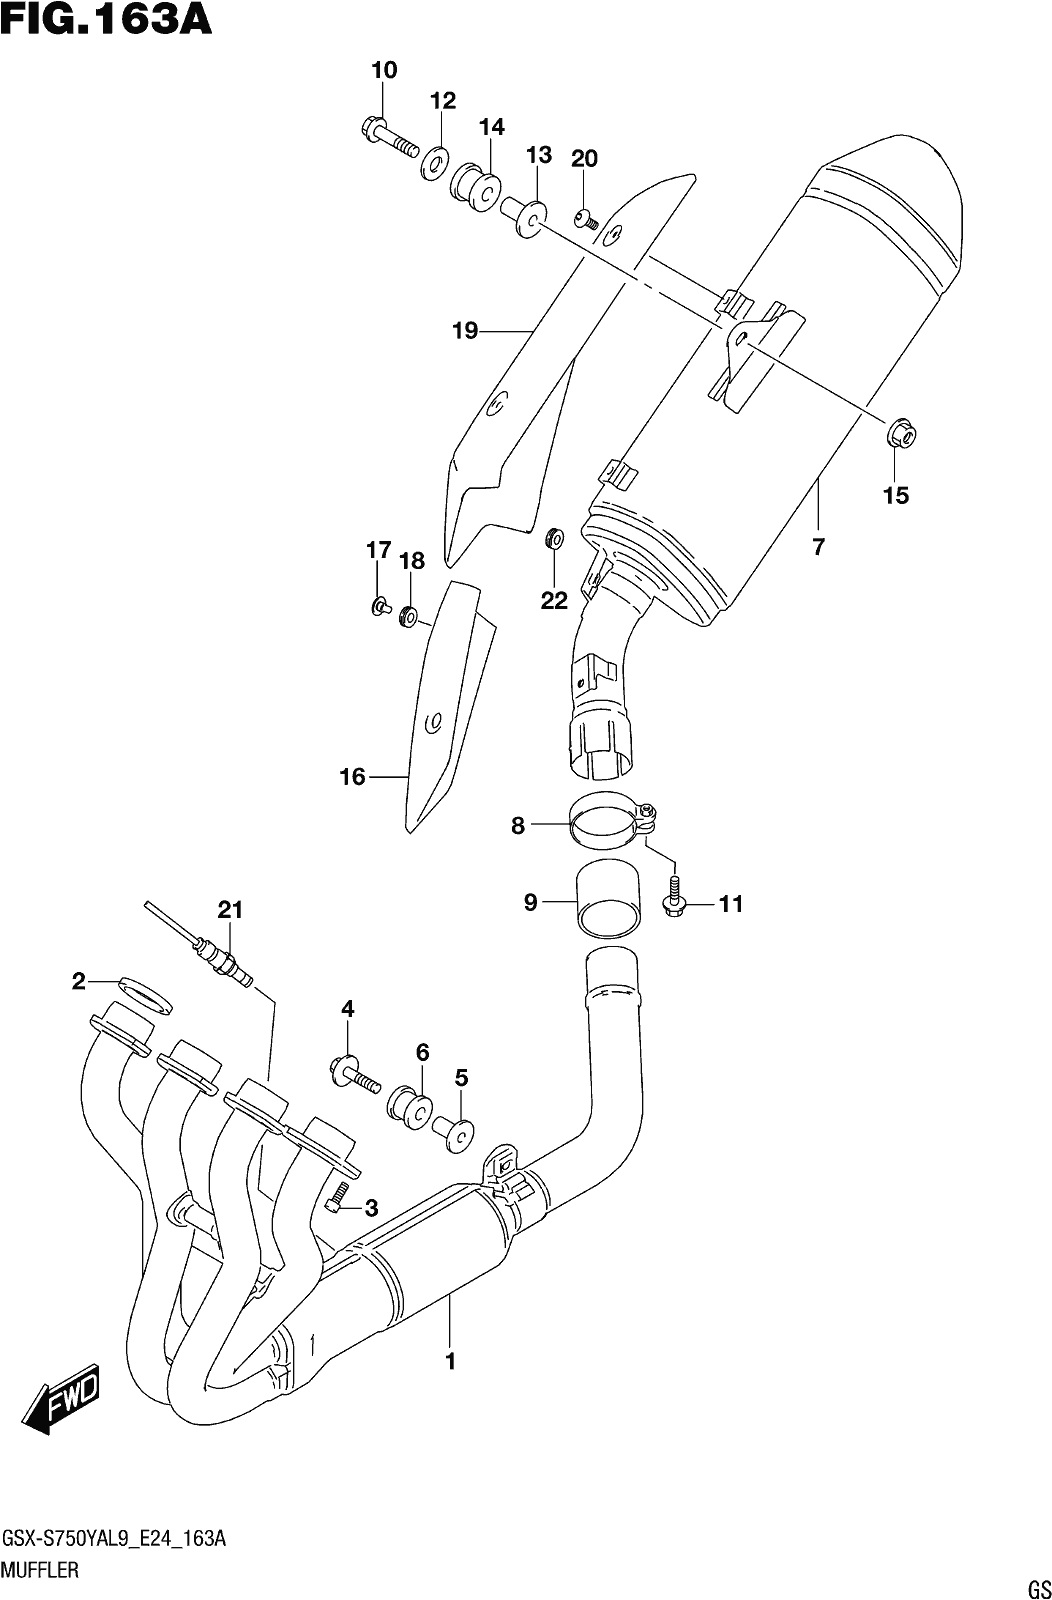 Fig.163a Muffler (gsx-s750yal9 E24)